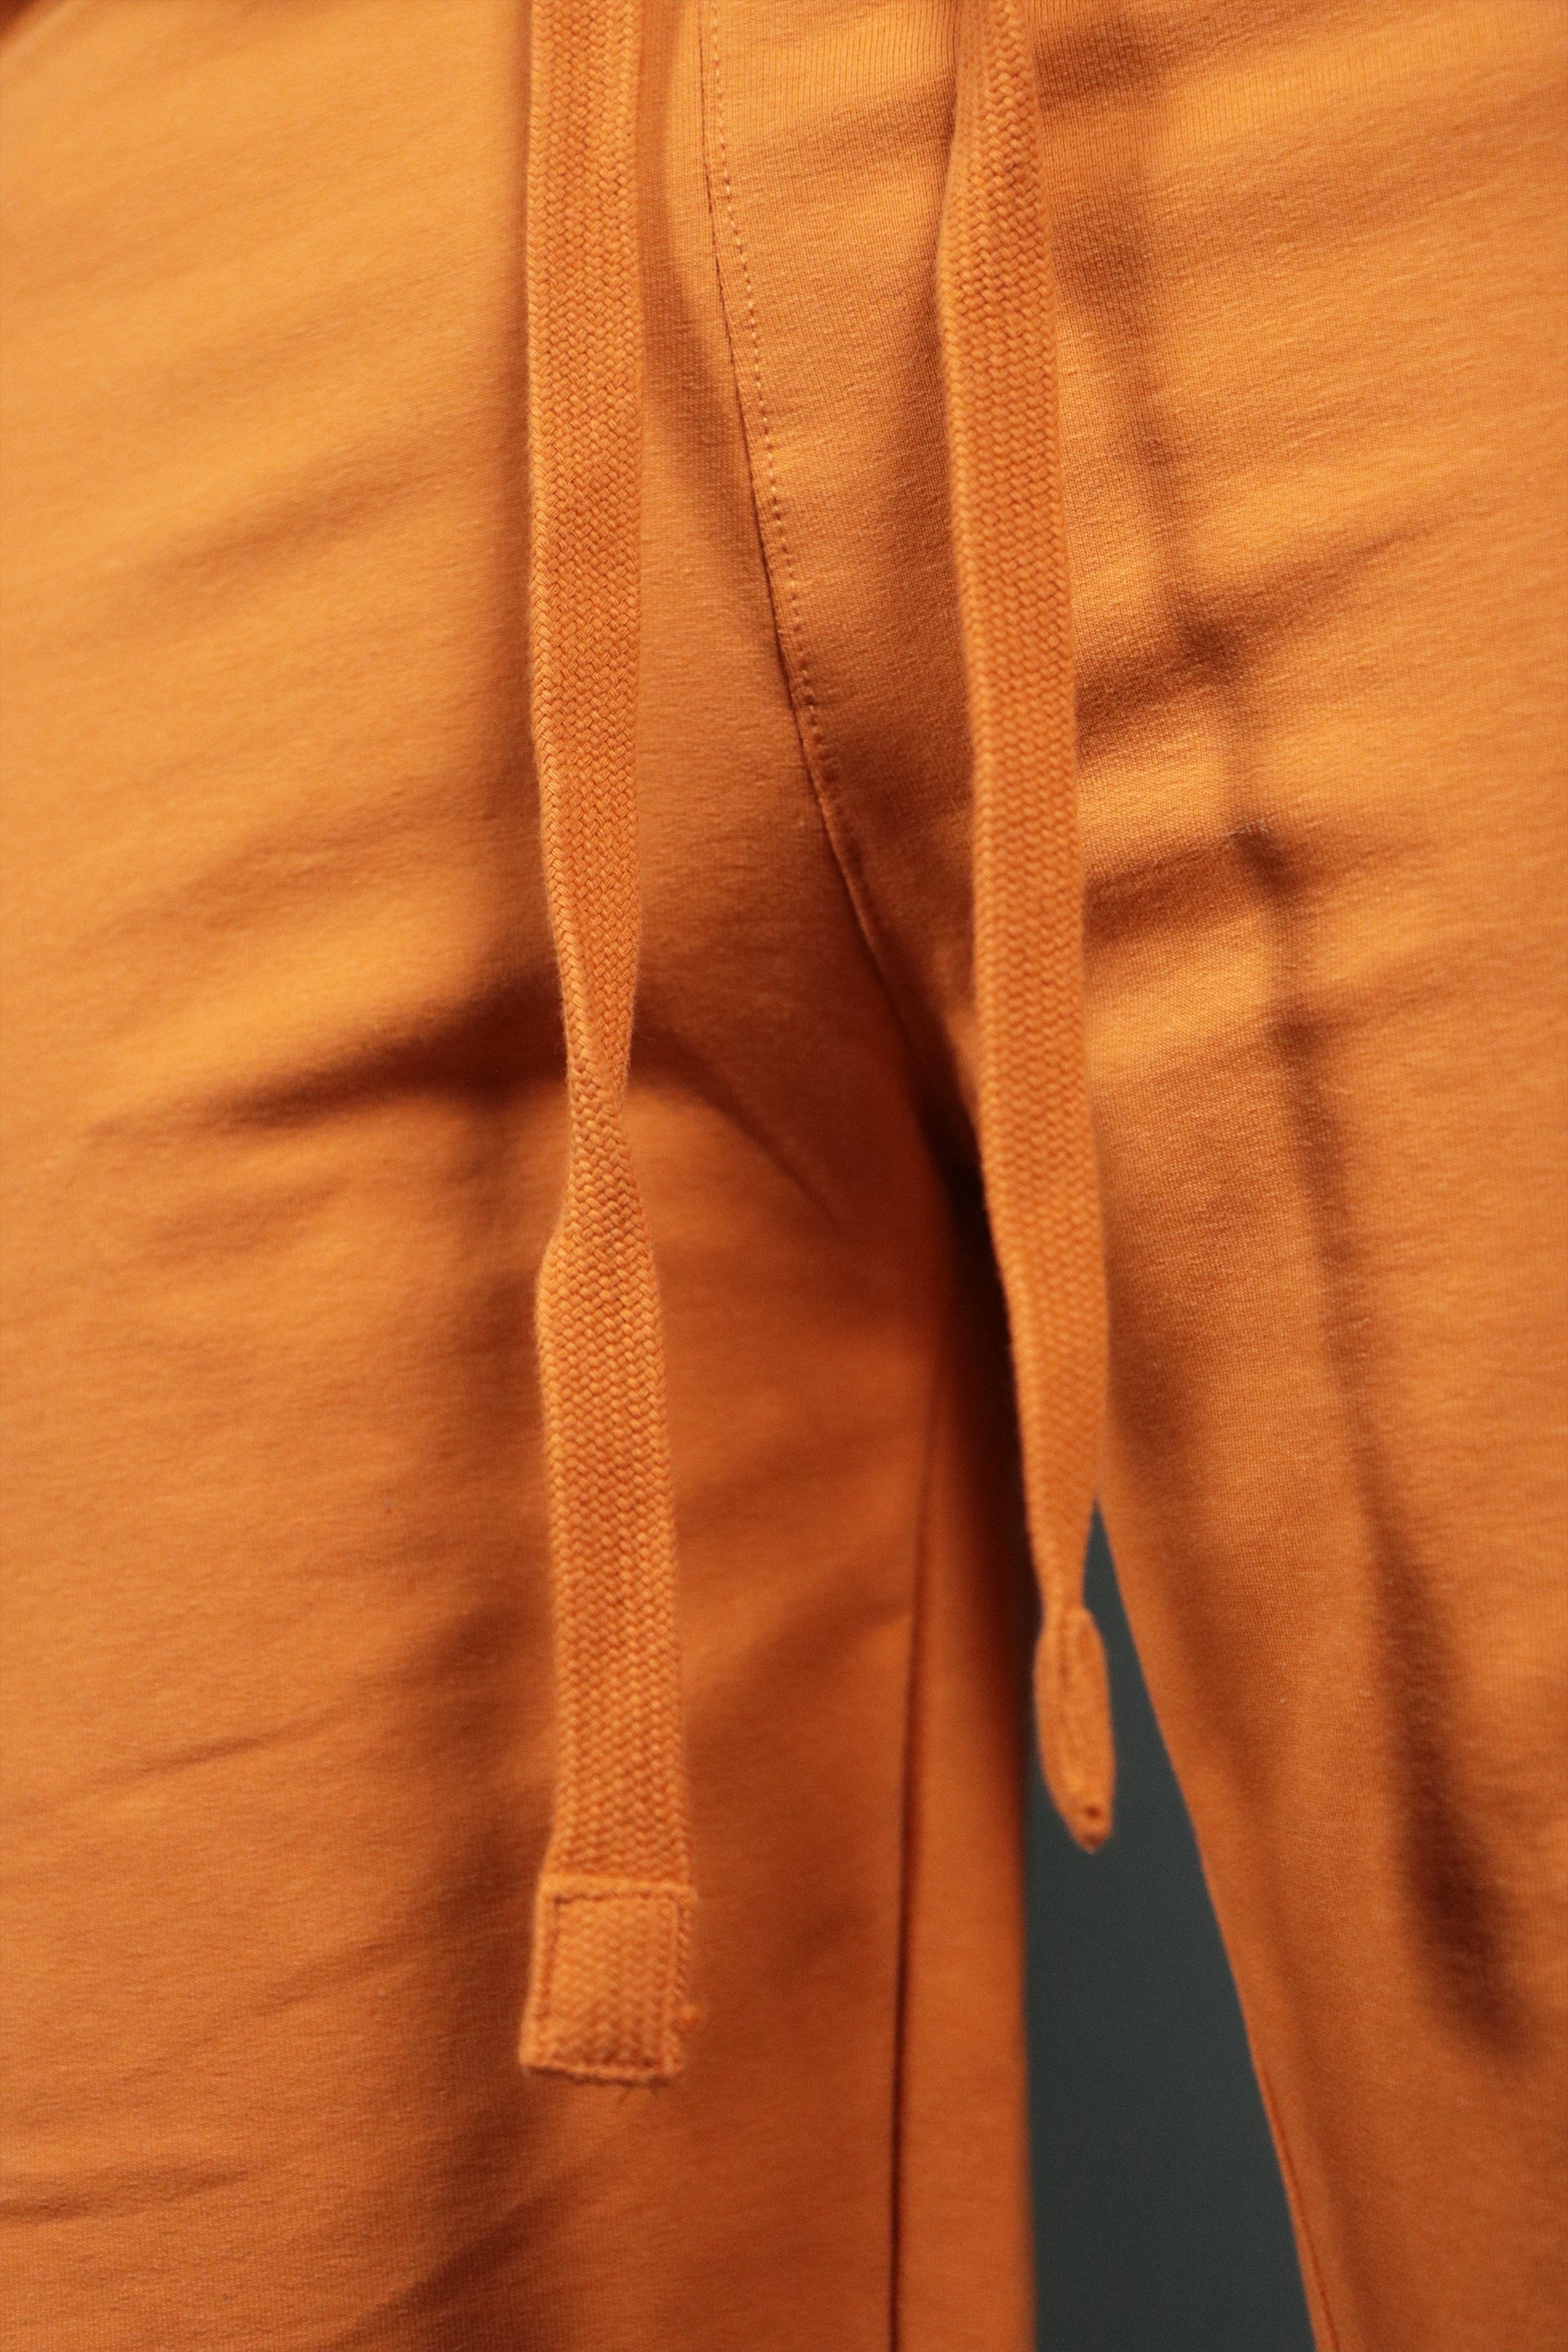 The two drawstrings of the orange Jordan Craig terry shorts.